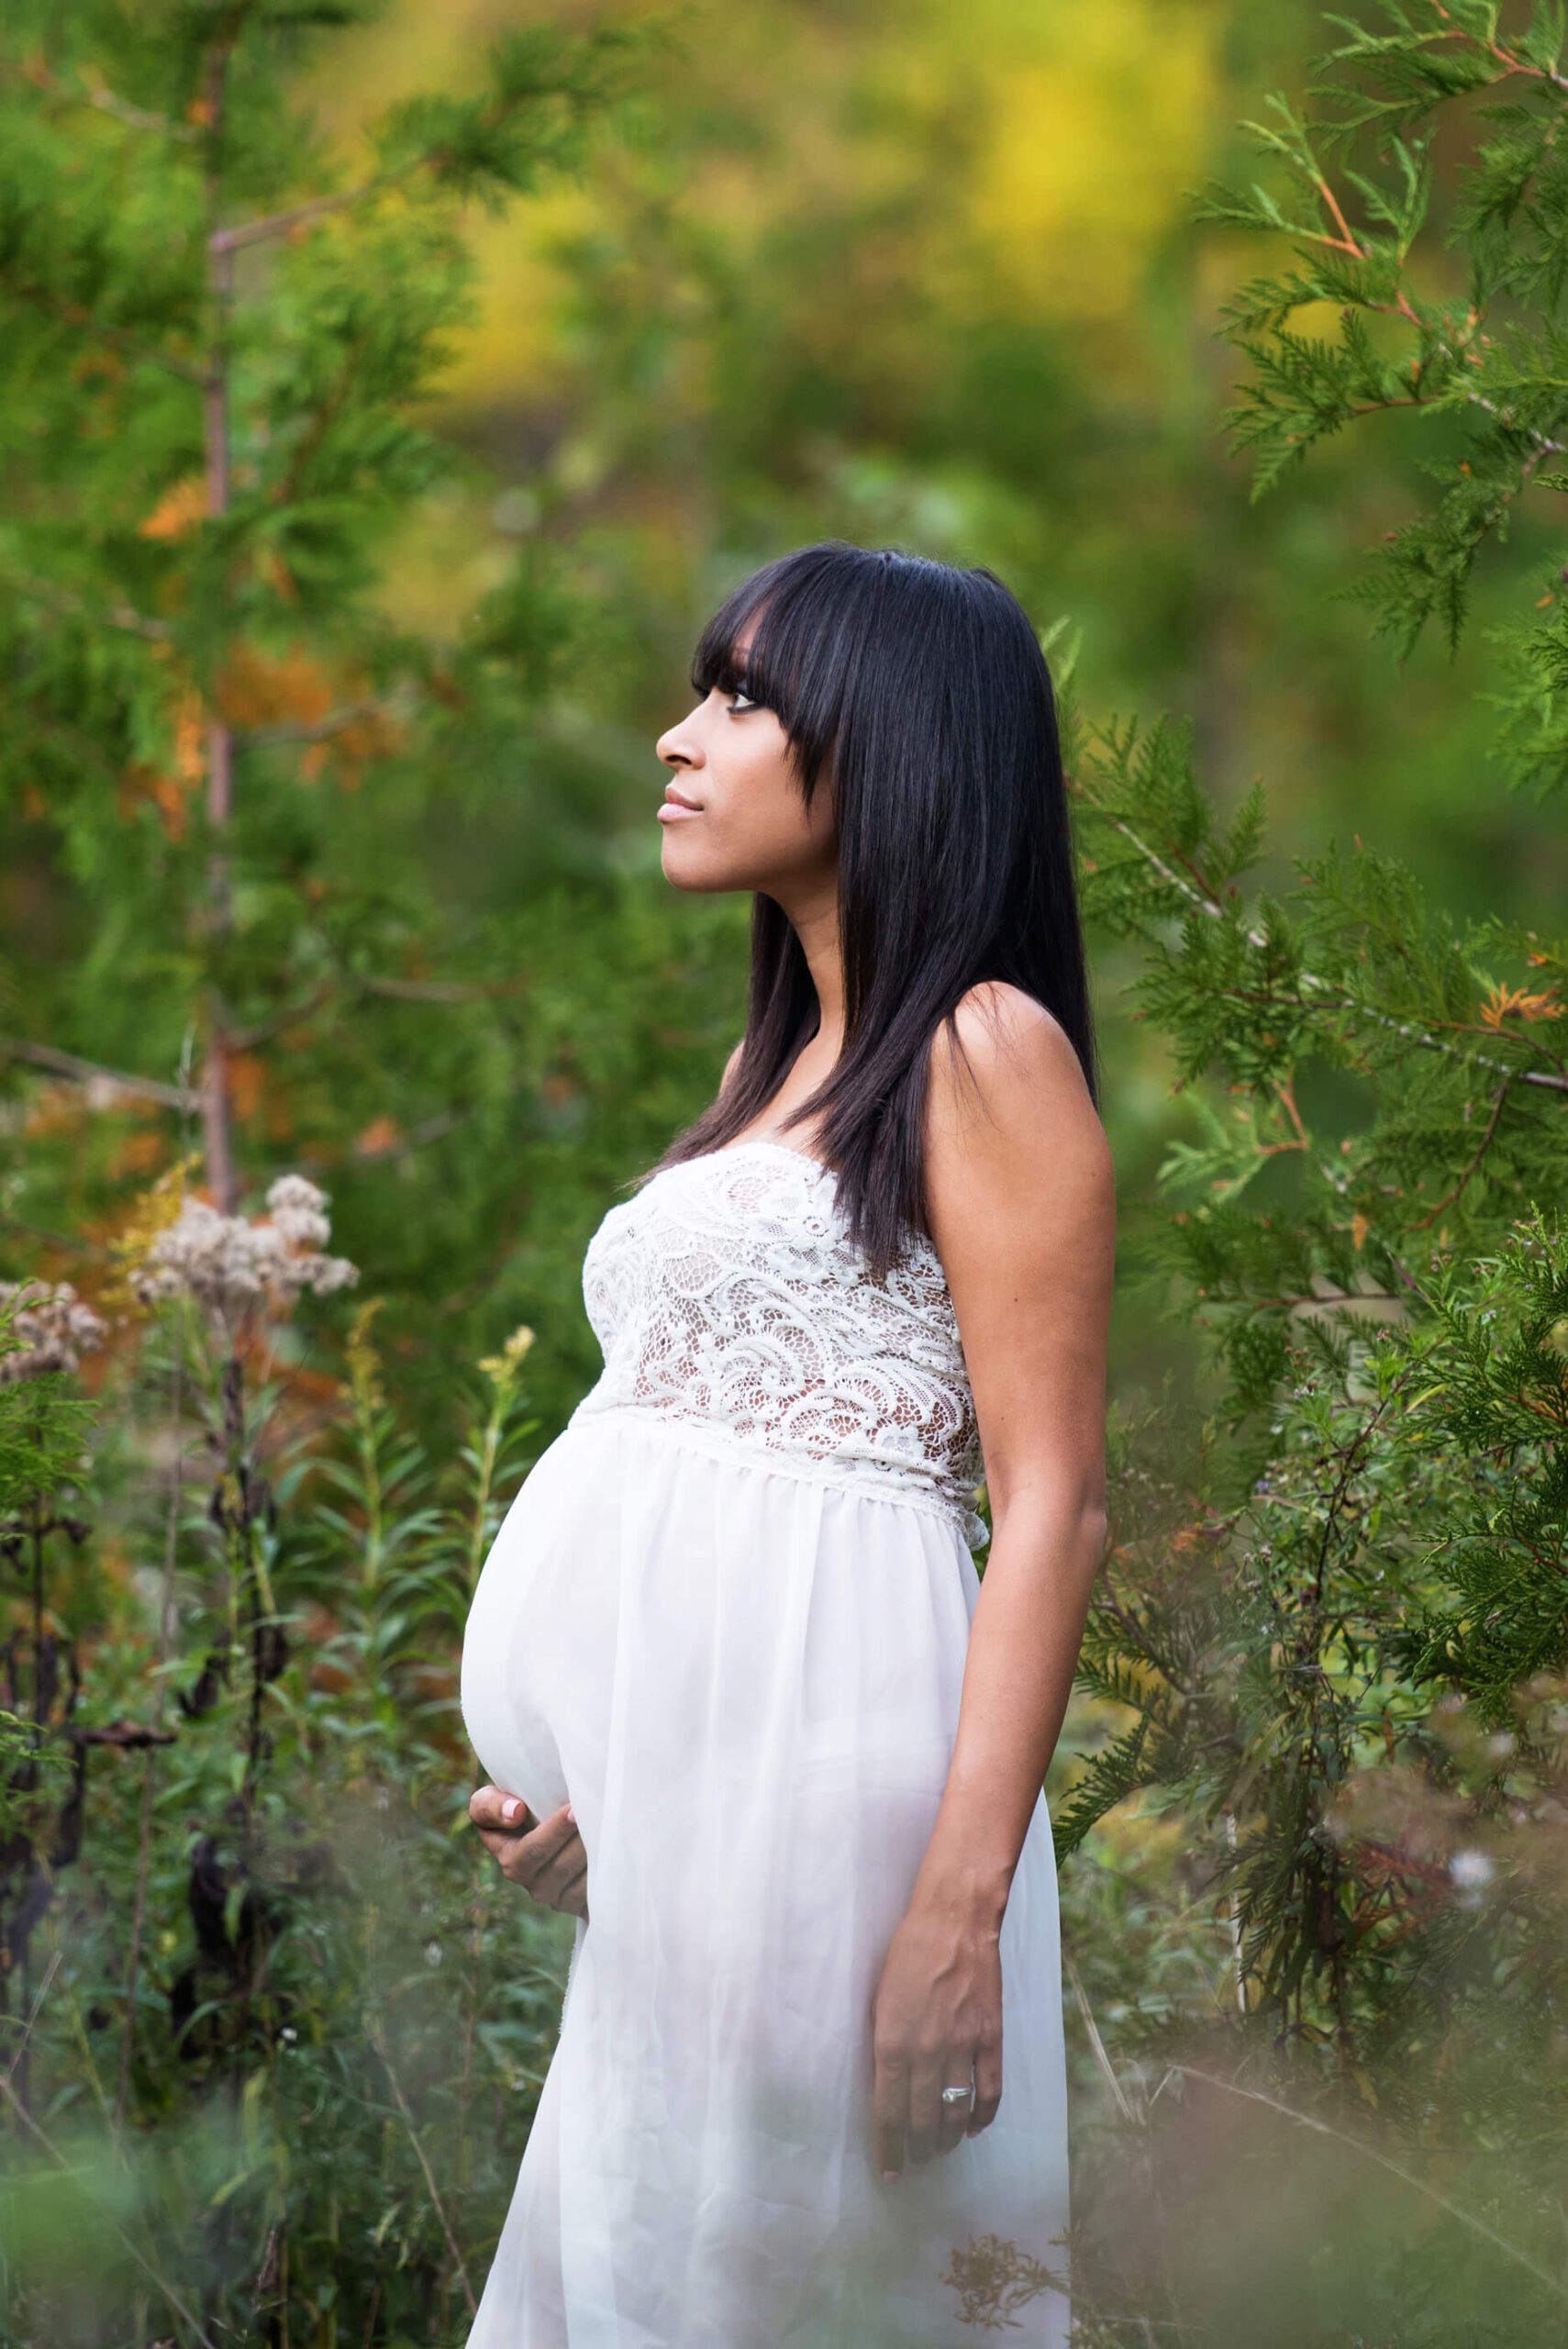 Stunning Outdoor Toronto Maternity Photos in the Evergreens